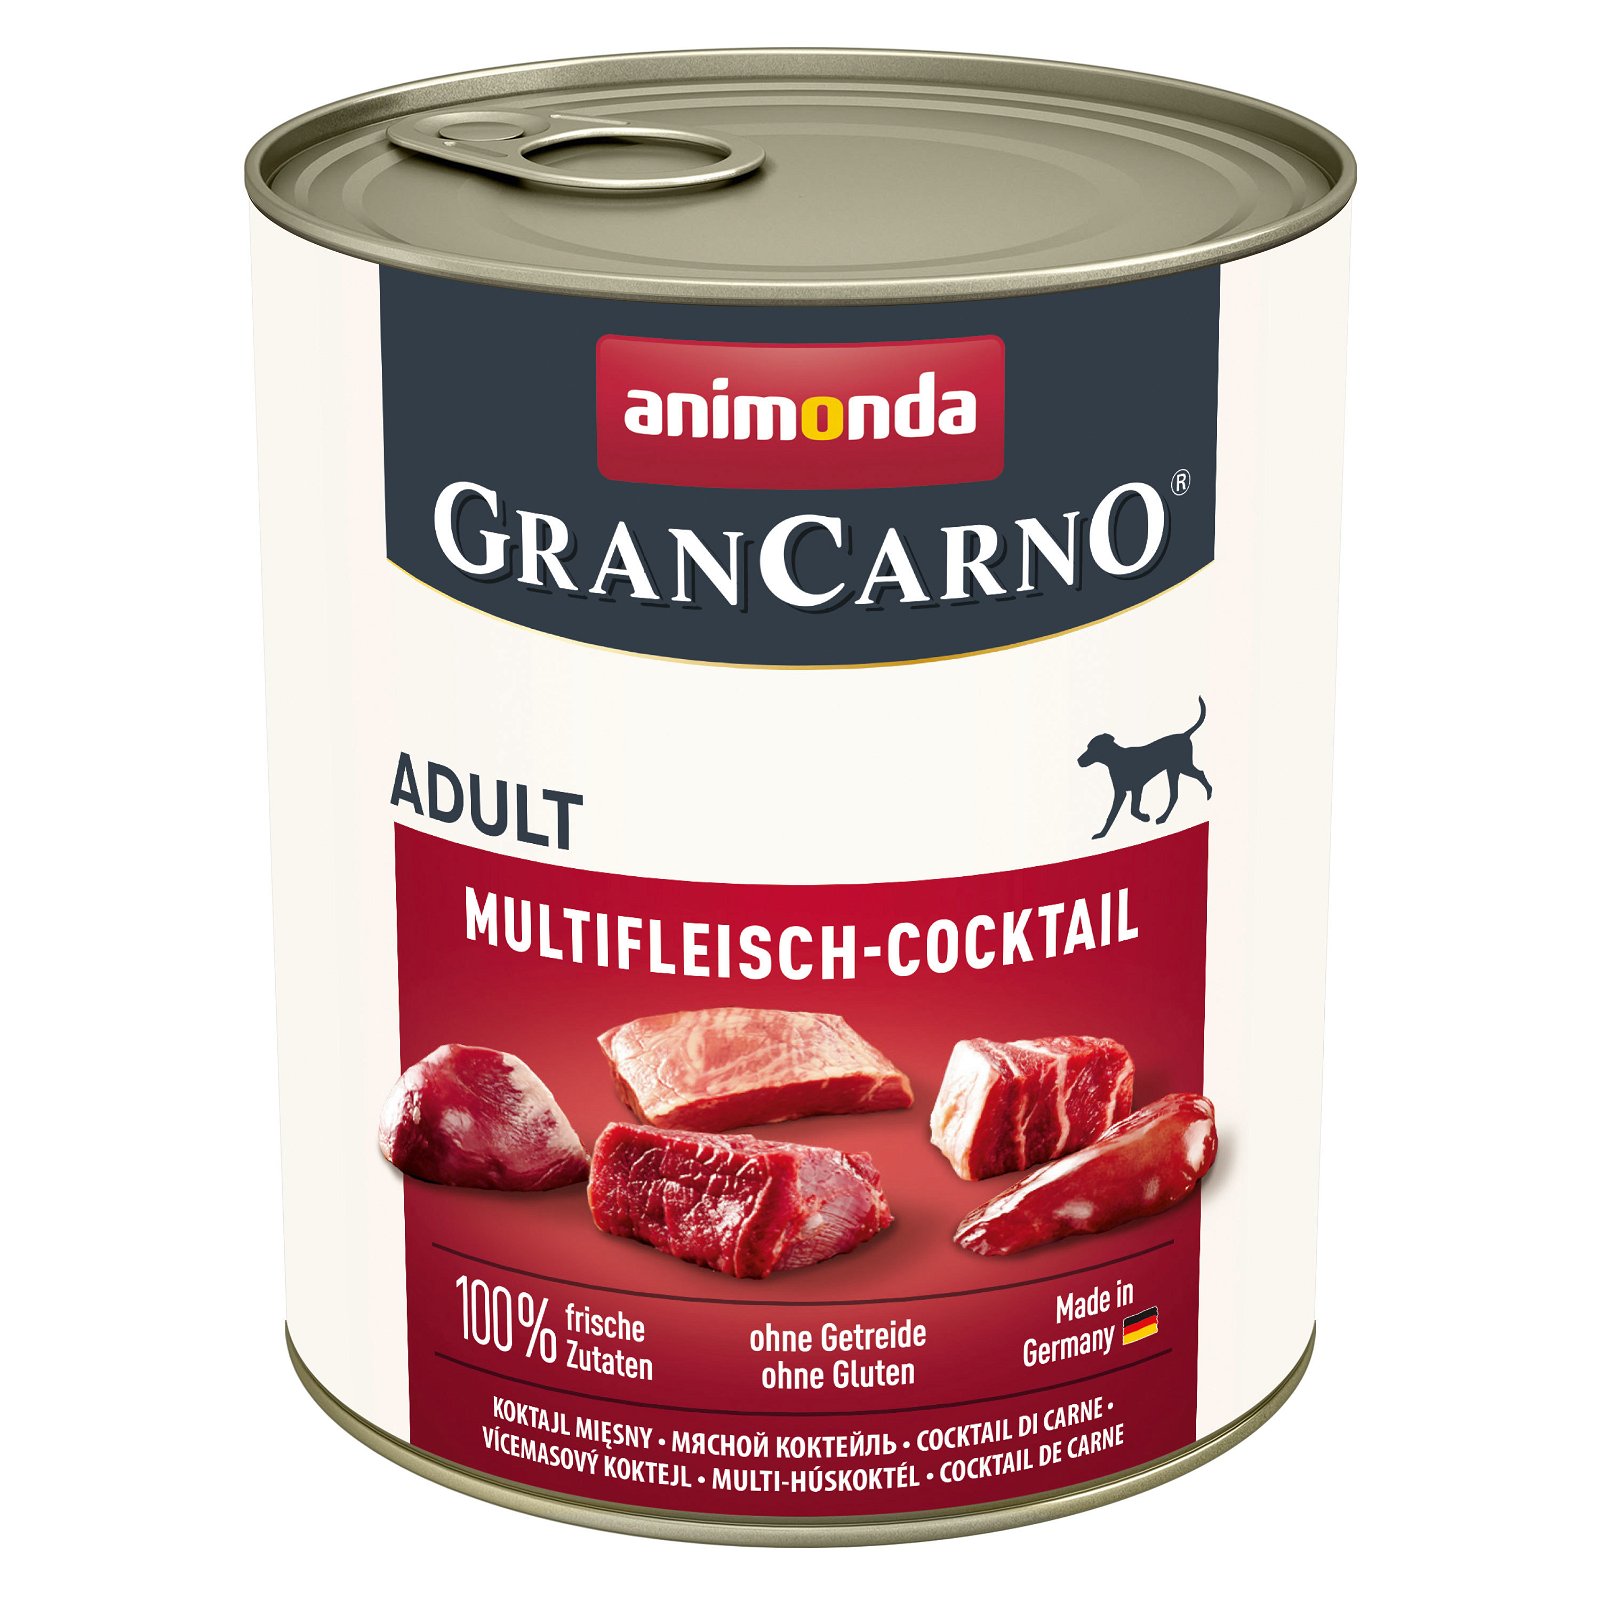 Hundefutter 'Animonda Cran Carno ® Adult', Multifleisch-Cocktail